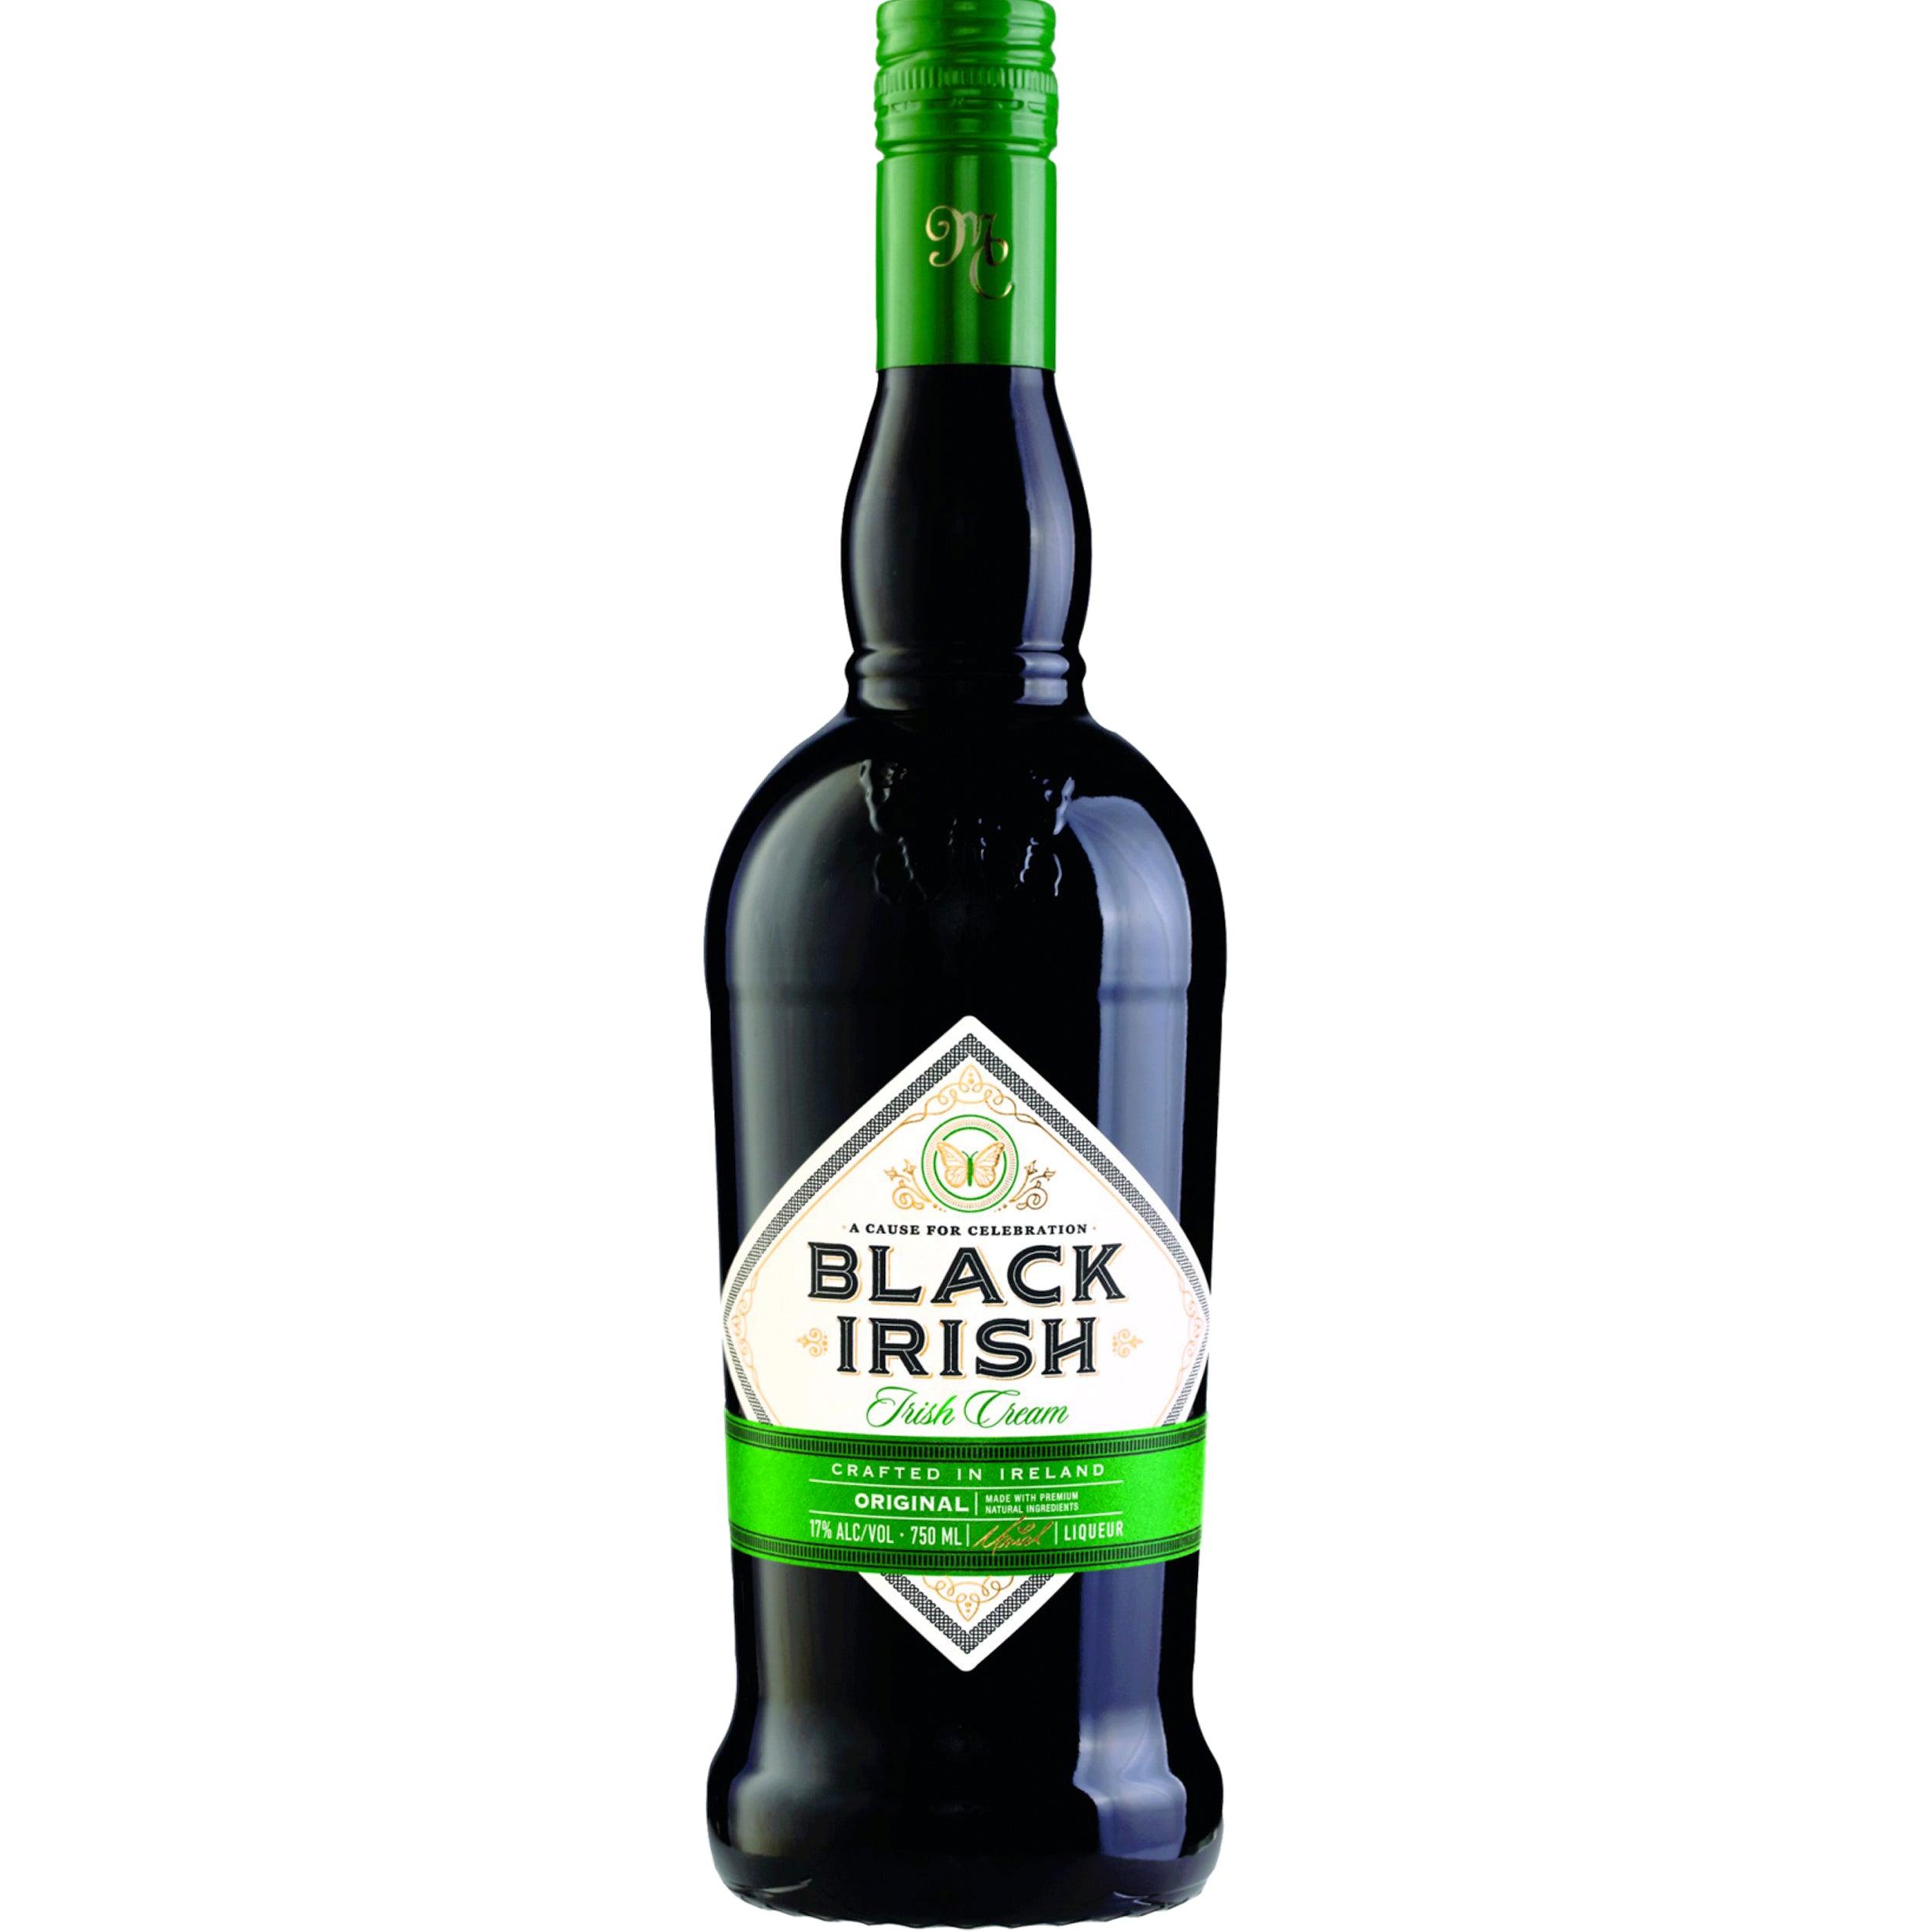 Black Irish Original Irish Liquor – Chips Cream